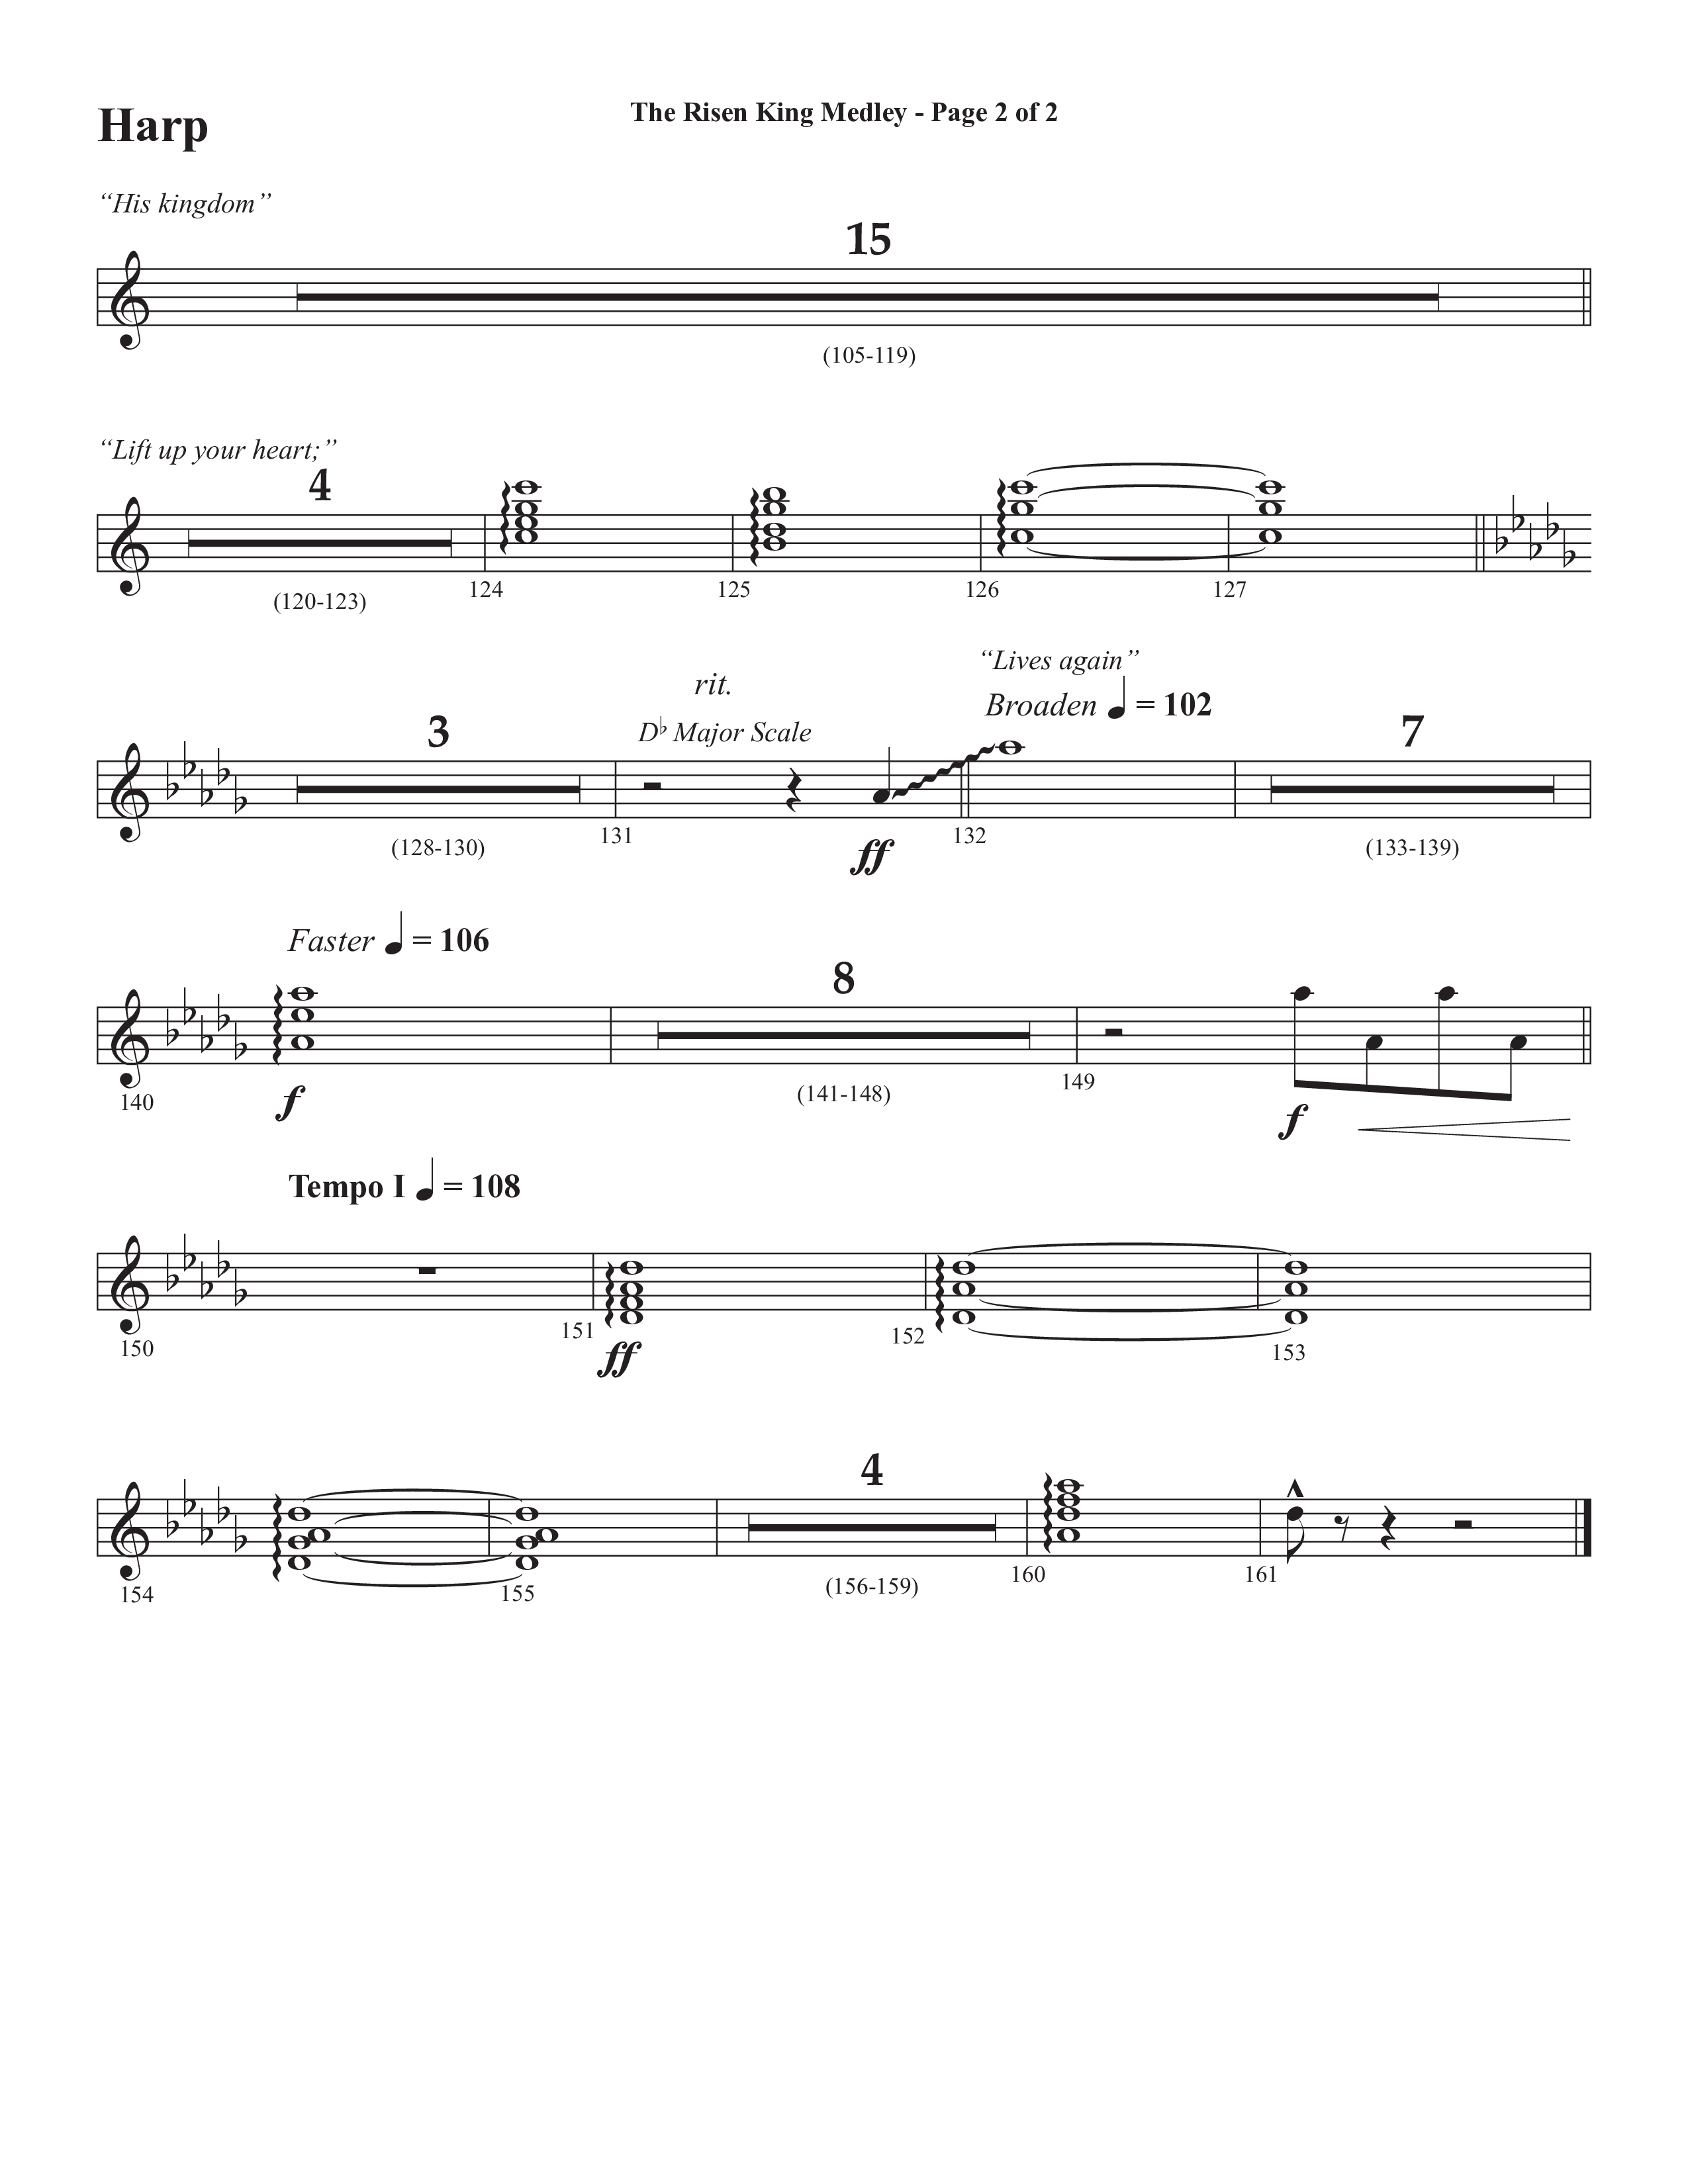 The Risen King Medley (Choral Anthem SATB) Harp (Semsen Music / Arr. John Bolin / Orch. Cliff Duren)